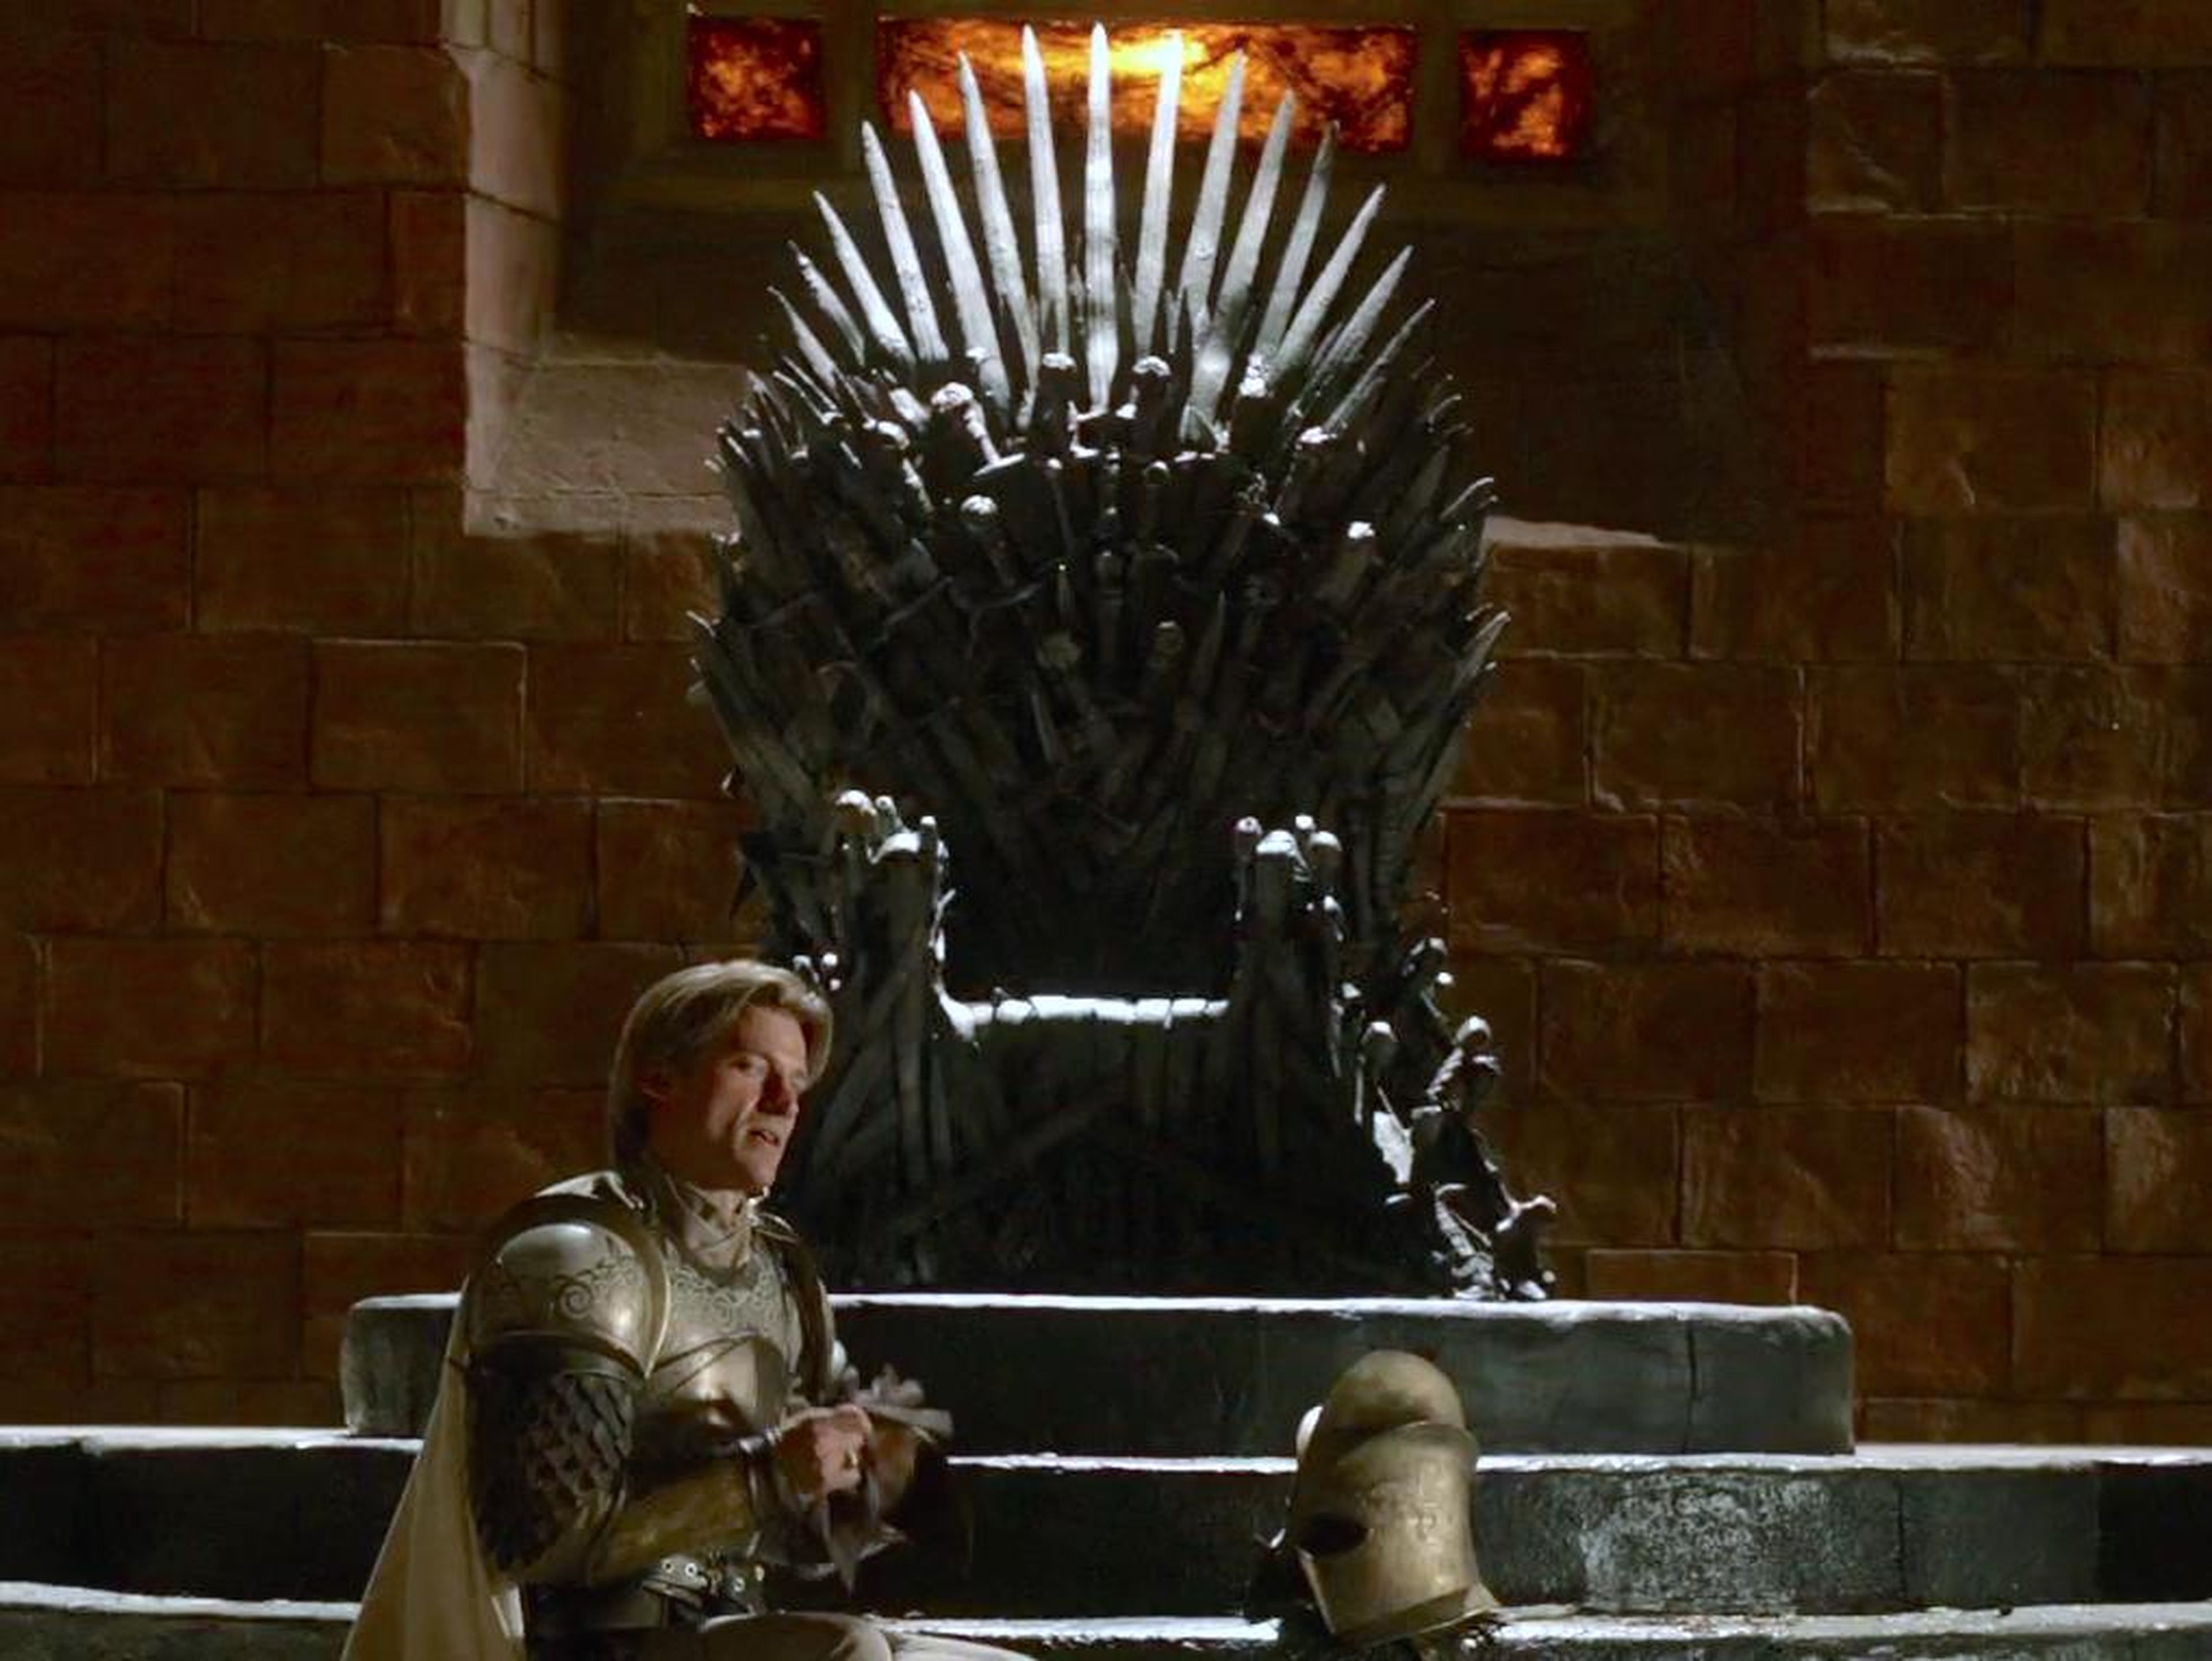 Jaime Lannister with the Iron Throne on an earlier season.